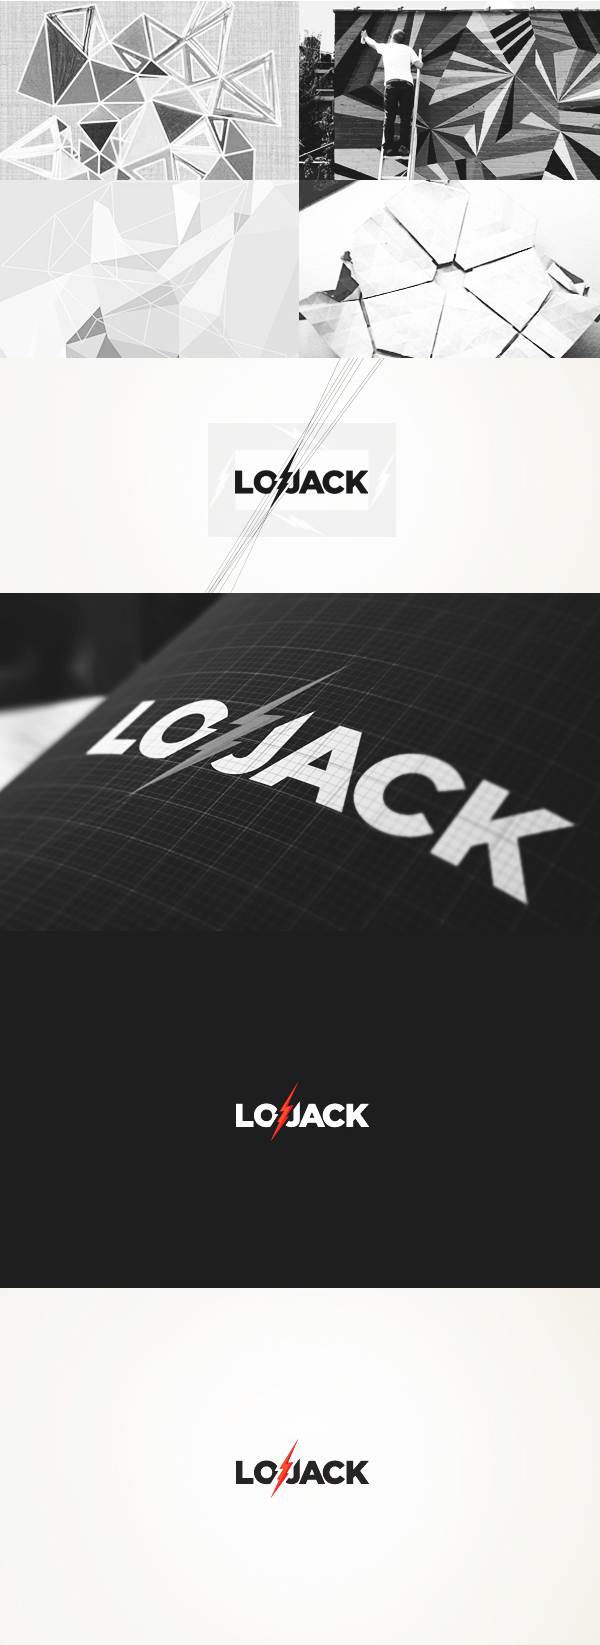 Lojack argentina security brand logo